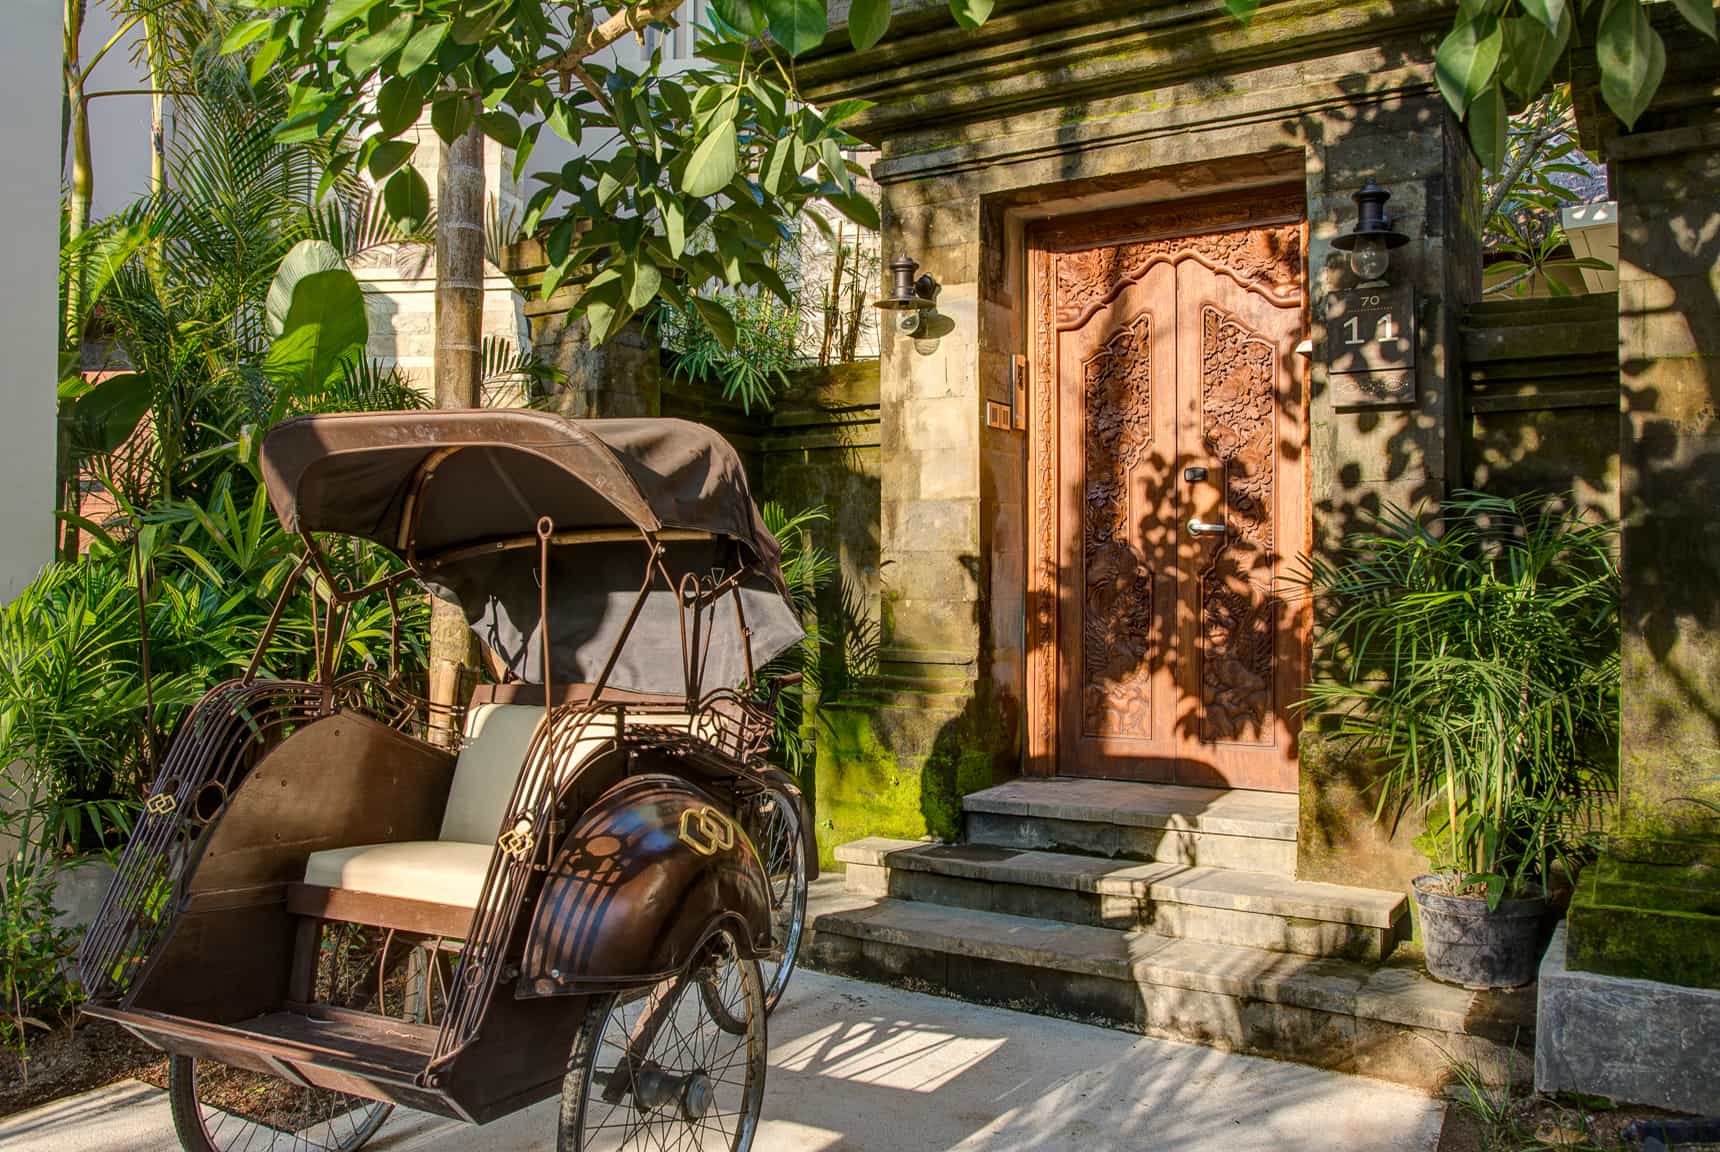 Sofitel - Nusa Dua, Bali Indonesia (Bali hotel photography by master photographer Rick Carmichael of LuxViz)